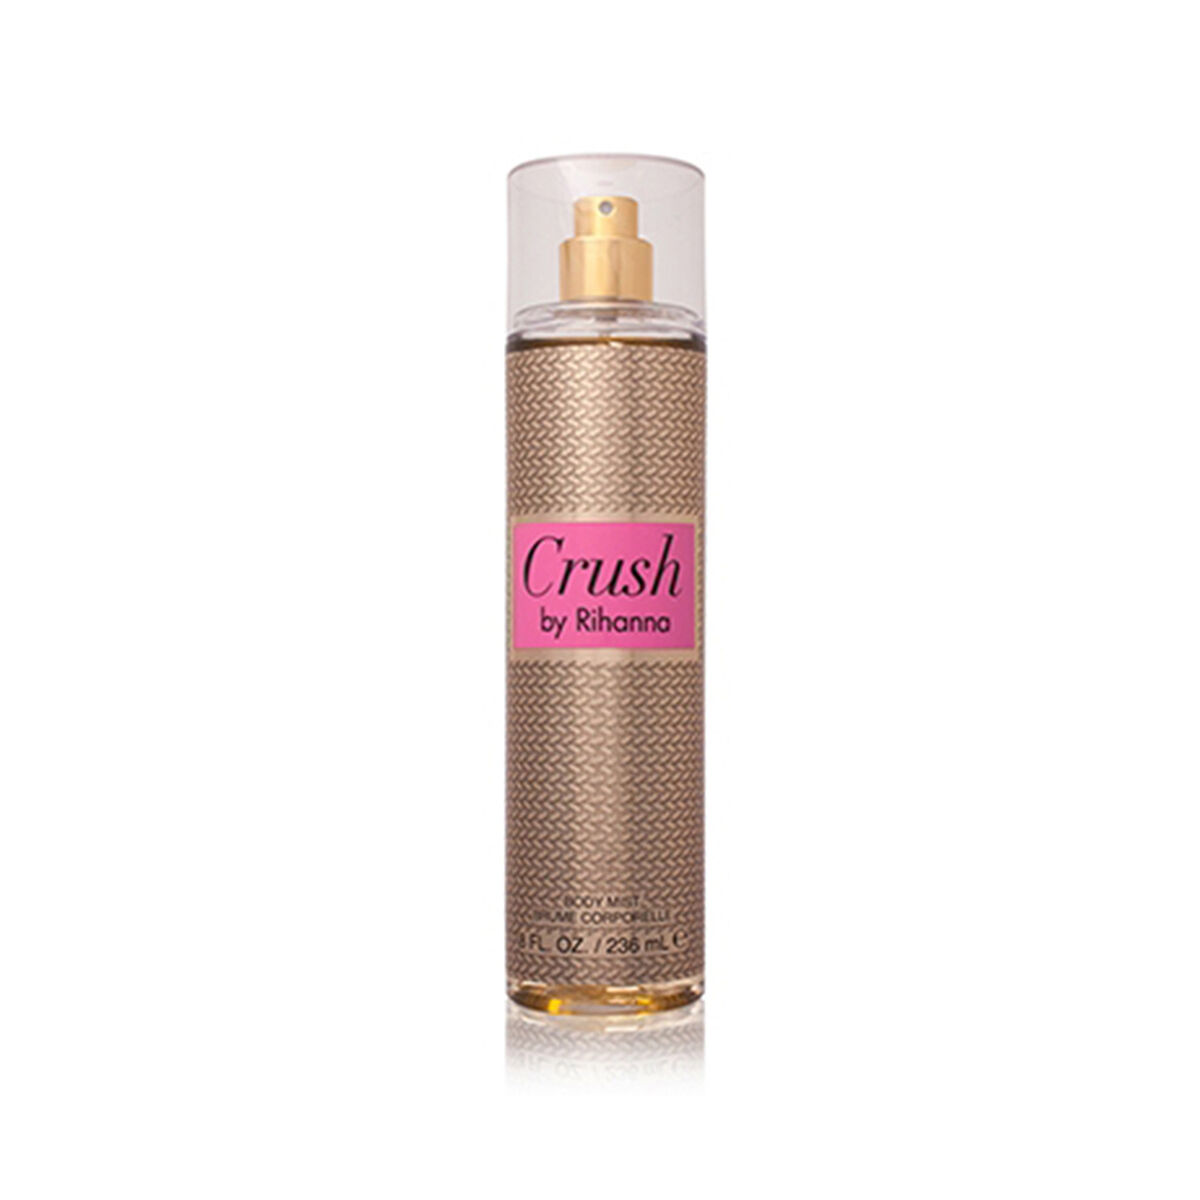 Perfume Crush Rihanna 236 ml